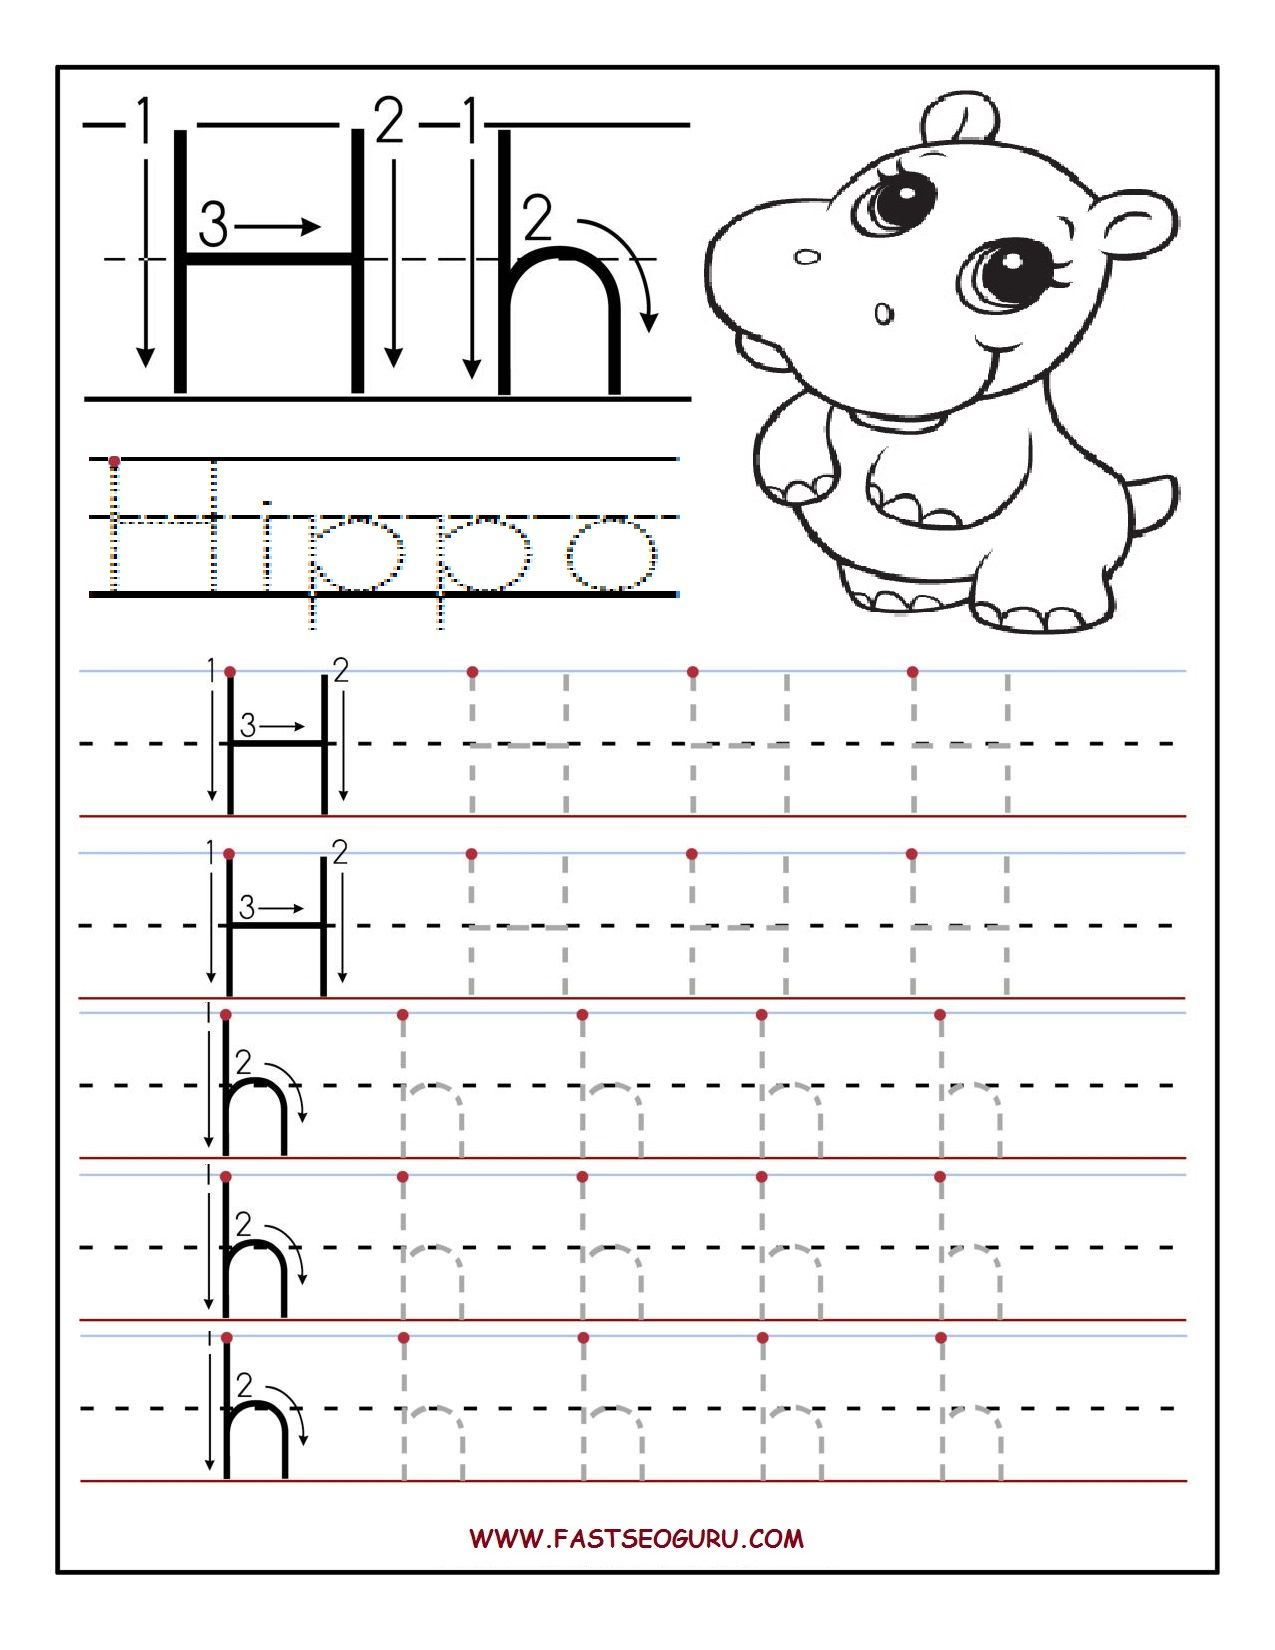 Printable Letter H Tracing Worksheets For Preschool regarding Letter H Tracing Worksheets For Preschool